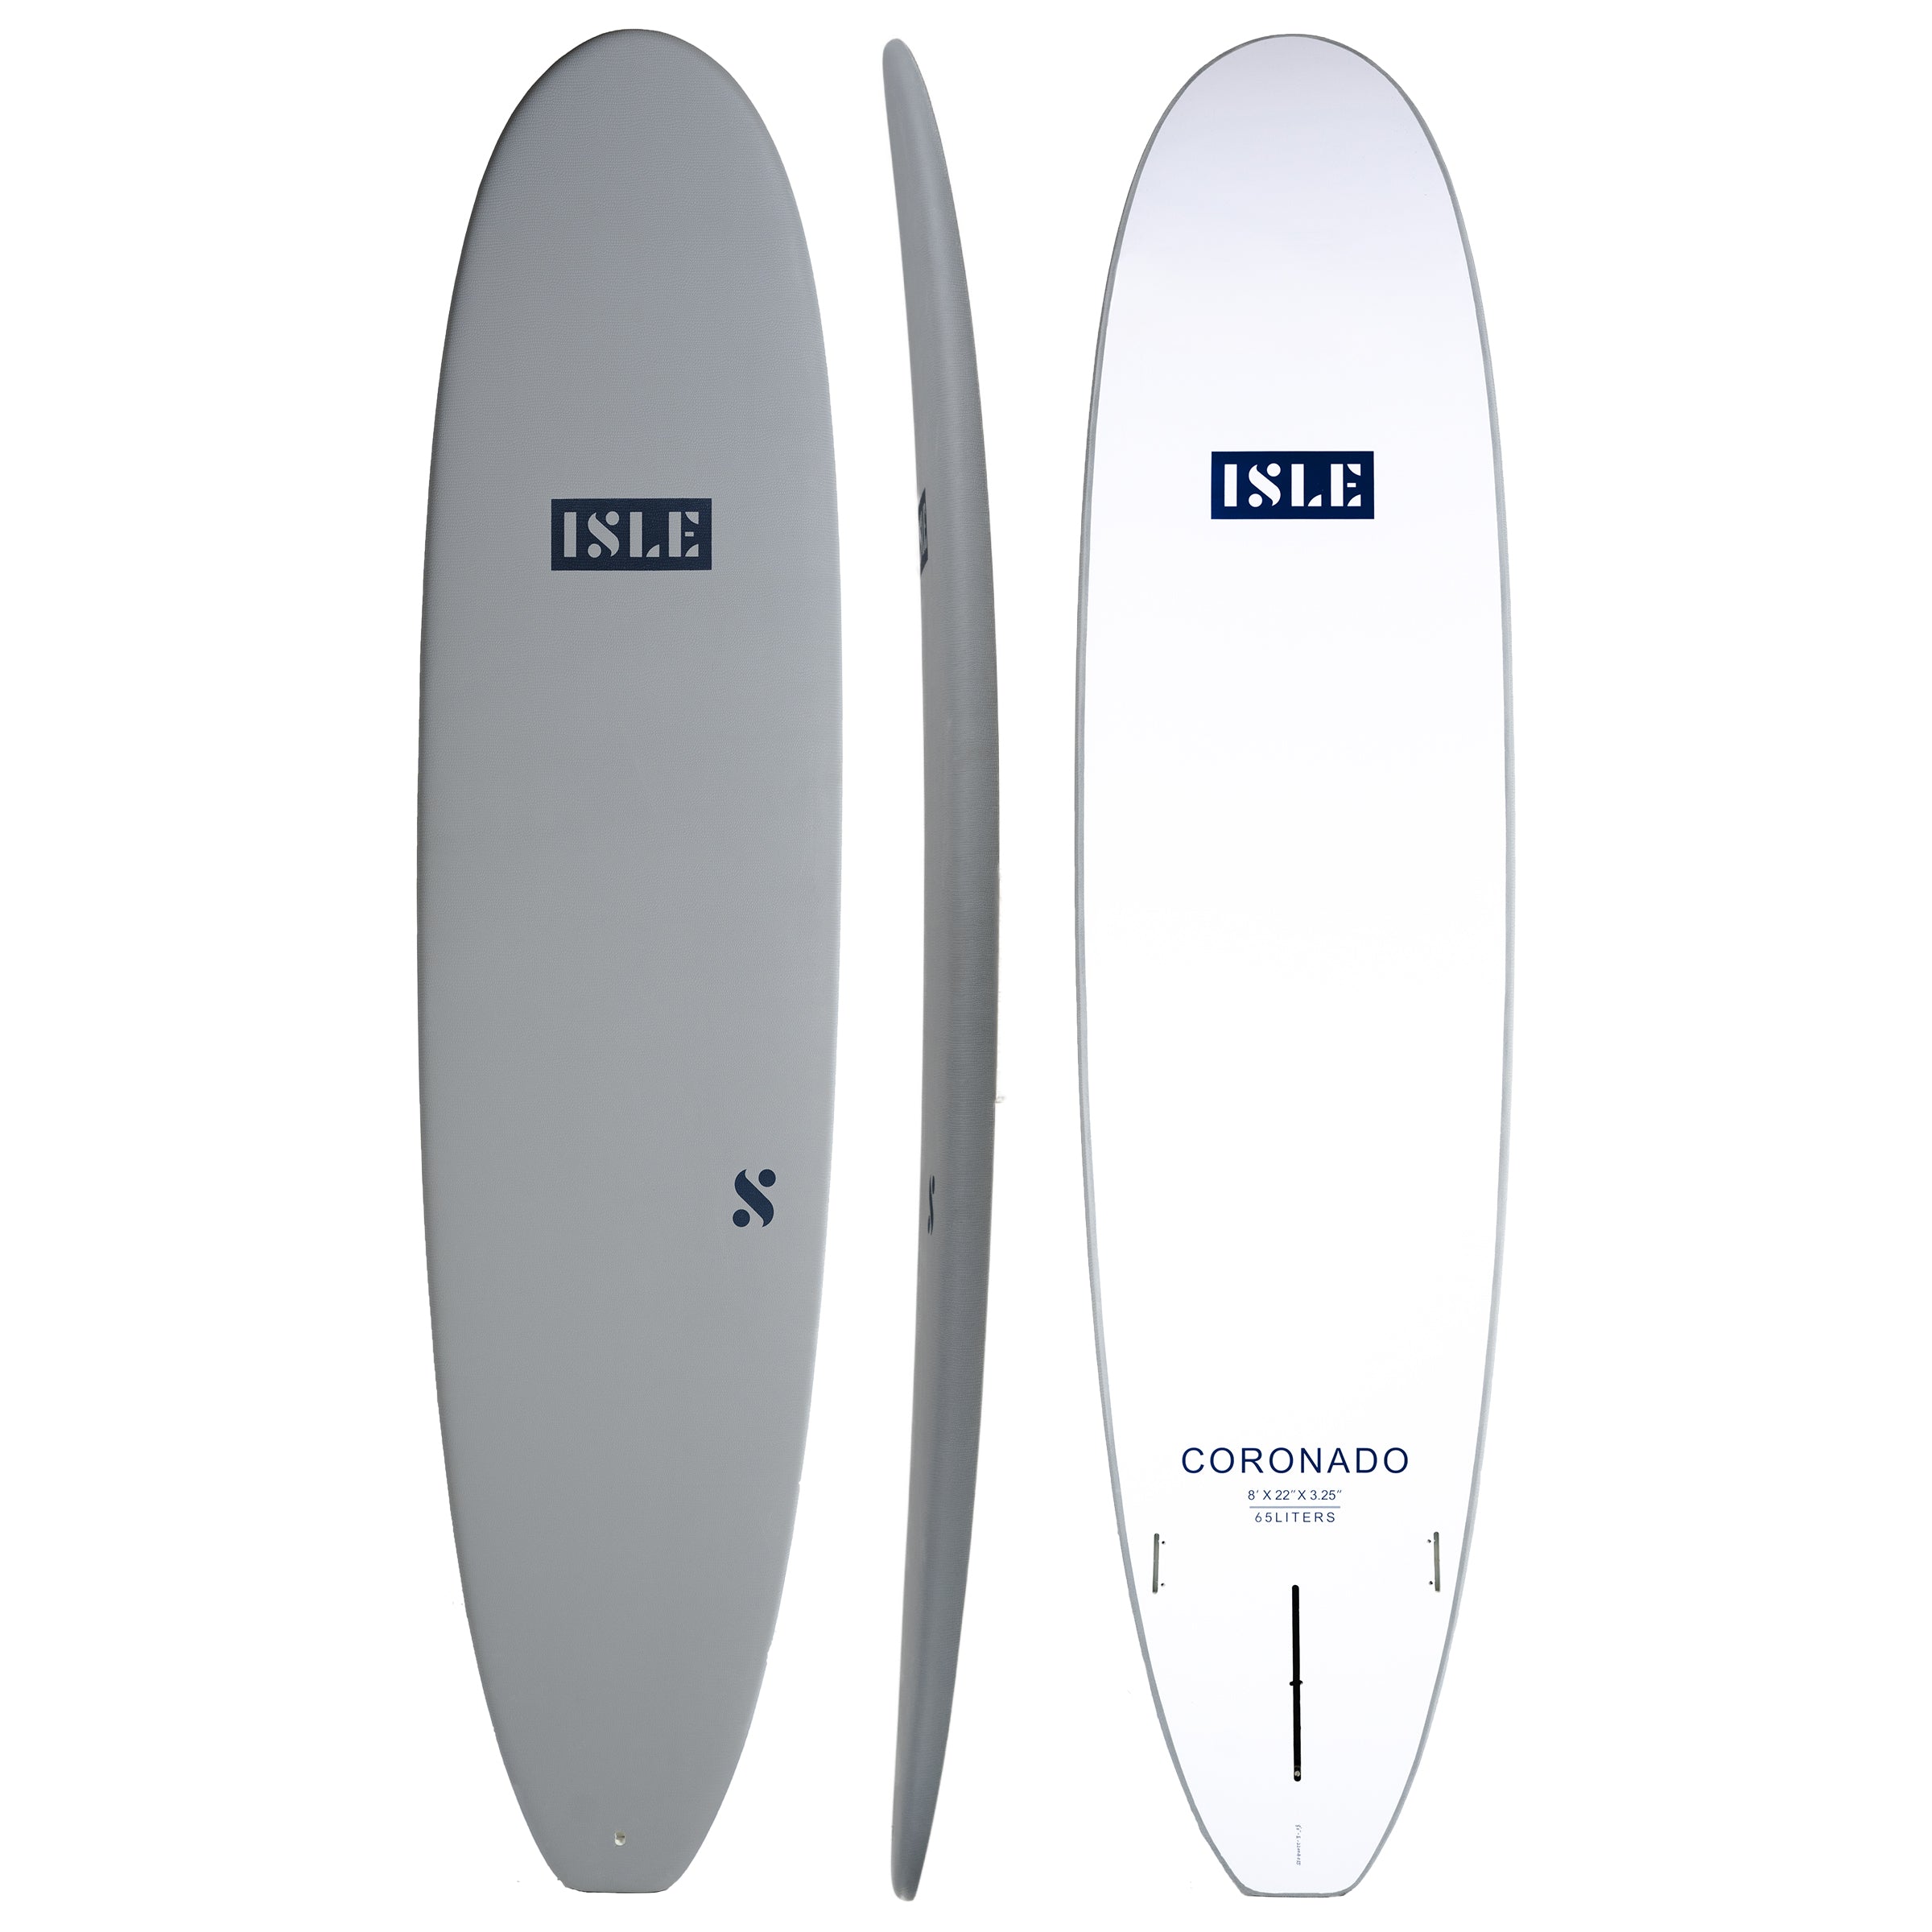 Coronado Soft Top Surfboard in Blue Grey